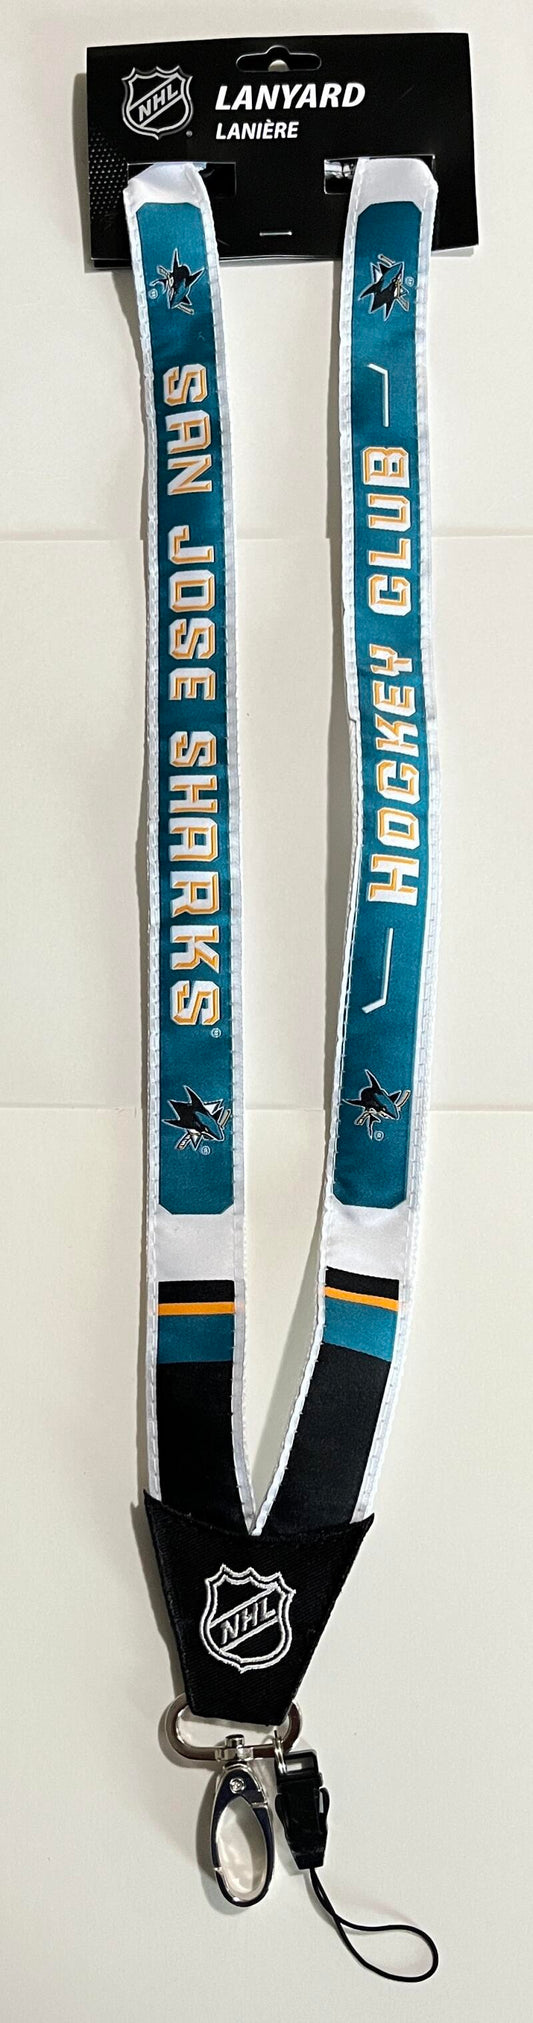 San Jose Sharks Woven Licensed NHL Hockey Lanyard Metal Clasp Image 1